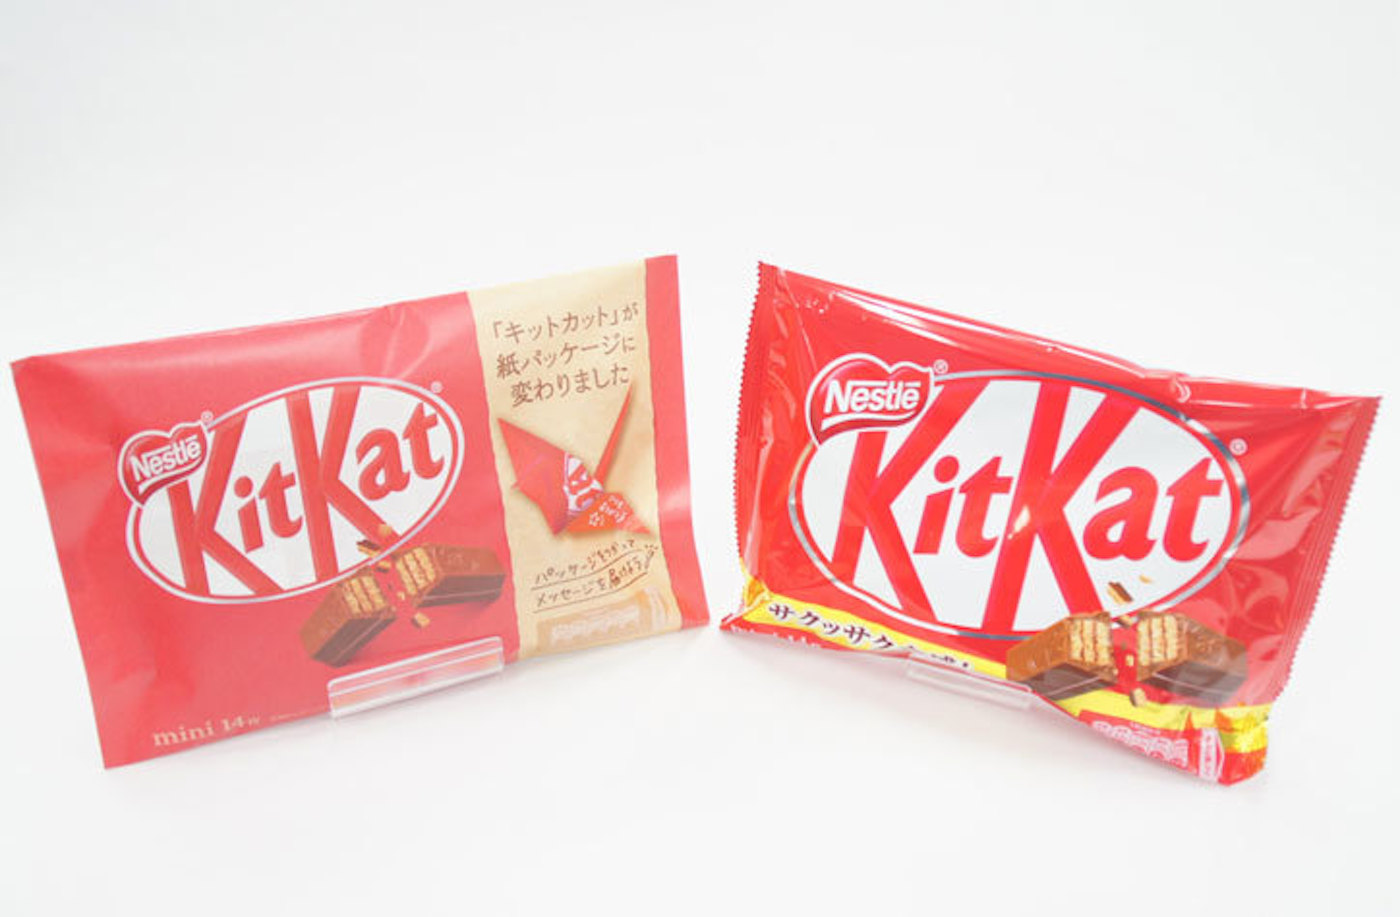 kit-kat-japon-nestle-packaging-origamis-3